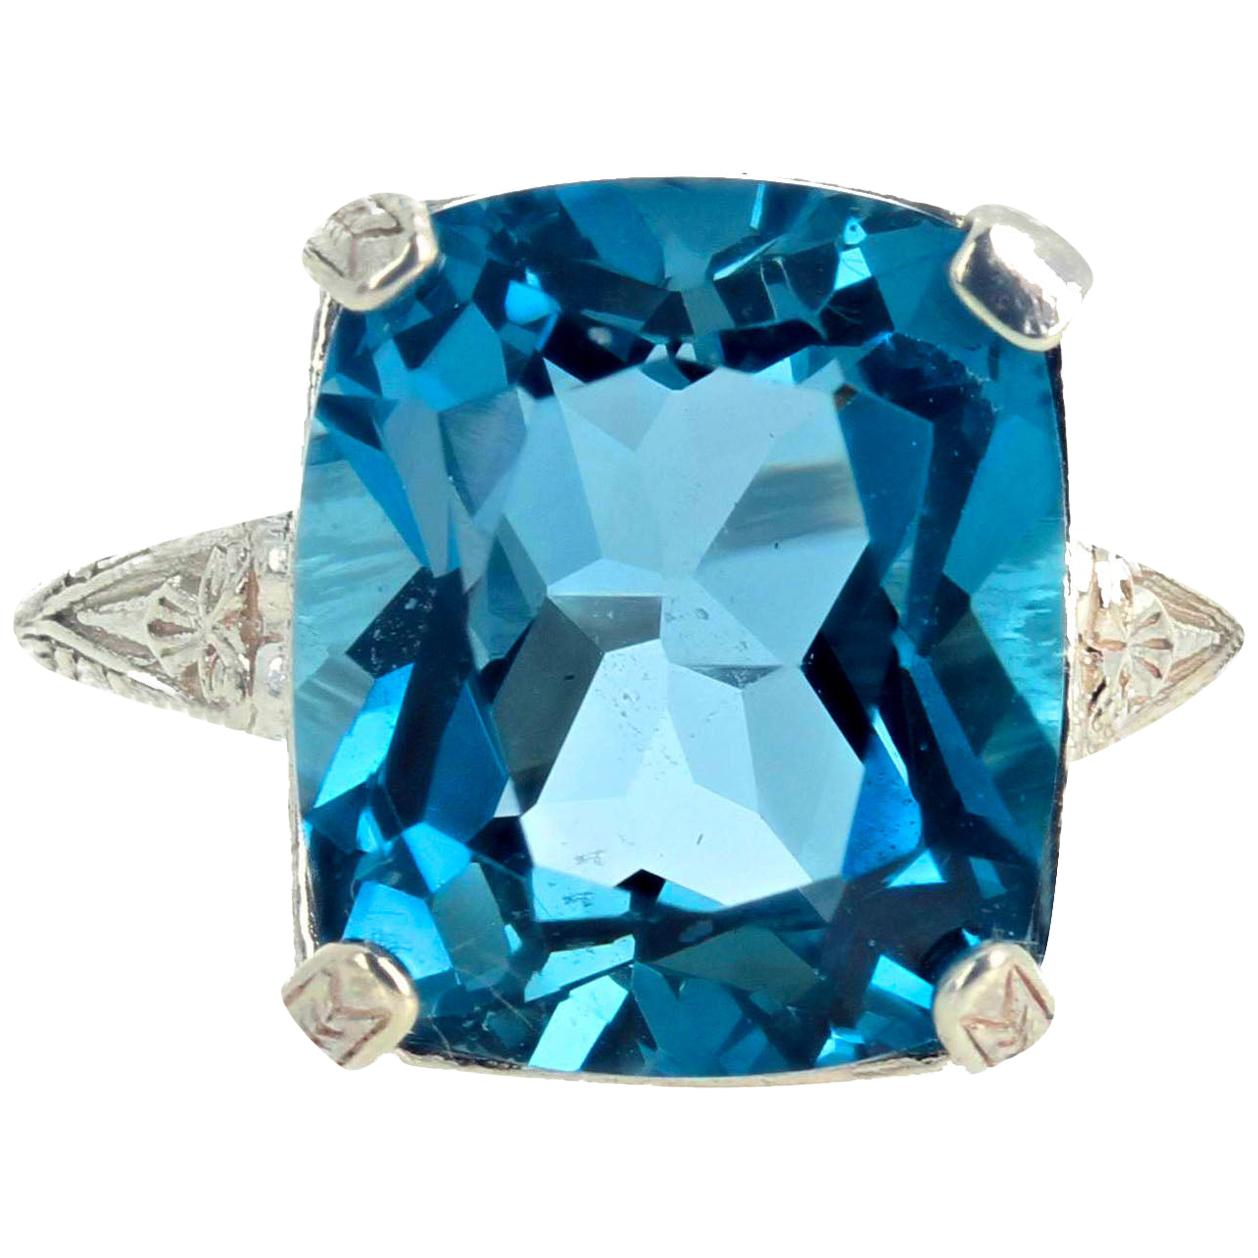 Gemjunky "Congratulations Collection" Stunning Intense London Blue Topaz Ring